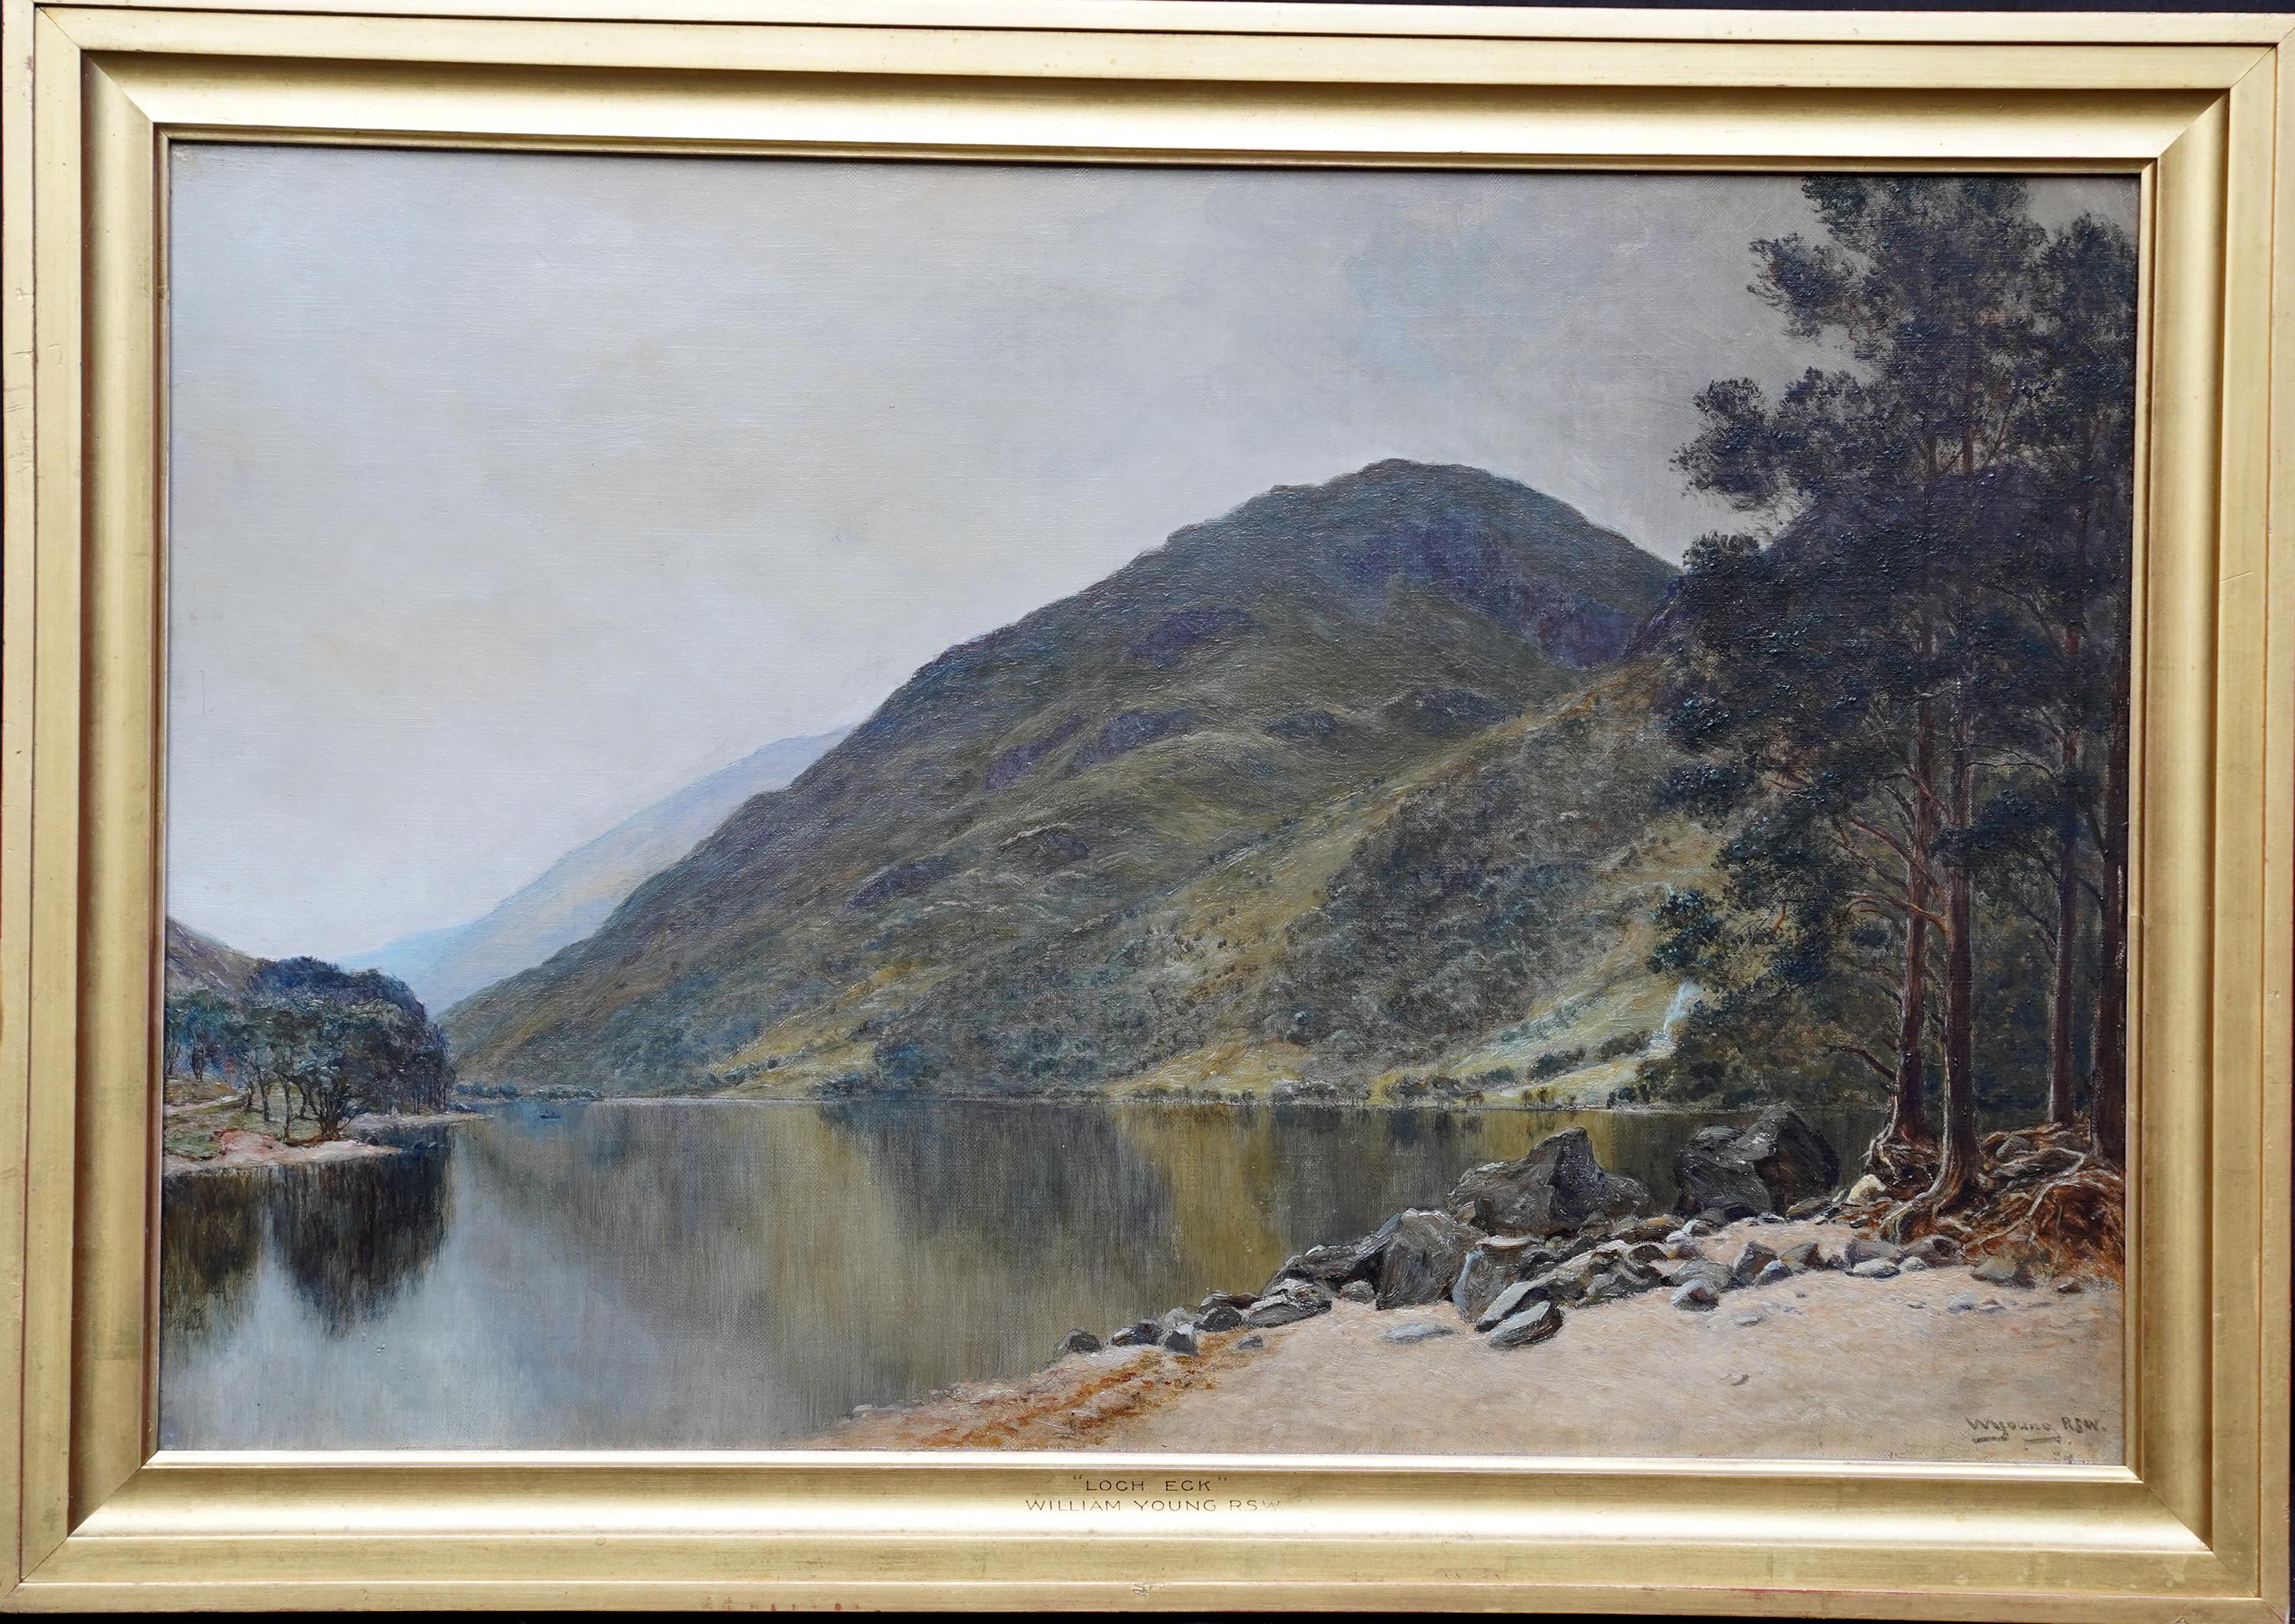 William Young Landscape Painting - Loch Eck, Scotland - Scottish Edwardian art landscape oil painting 